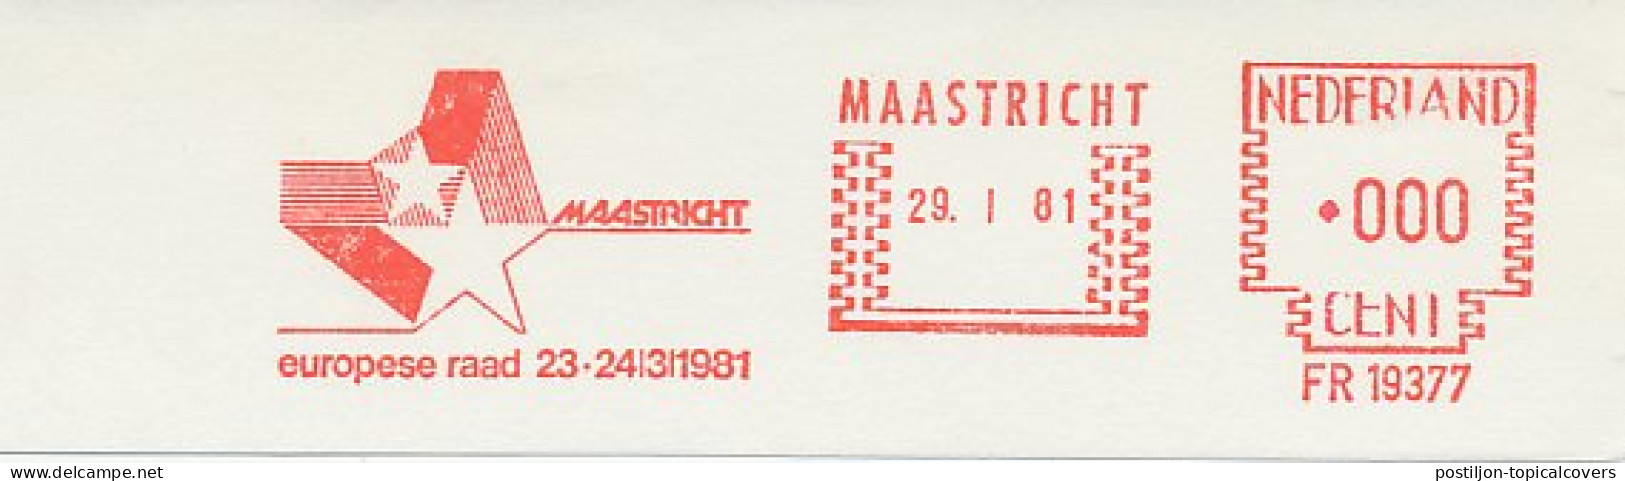 Meter Proof / Test Strip Netherlands 1981 European Council Maastricht - European Community